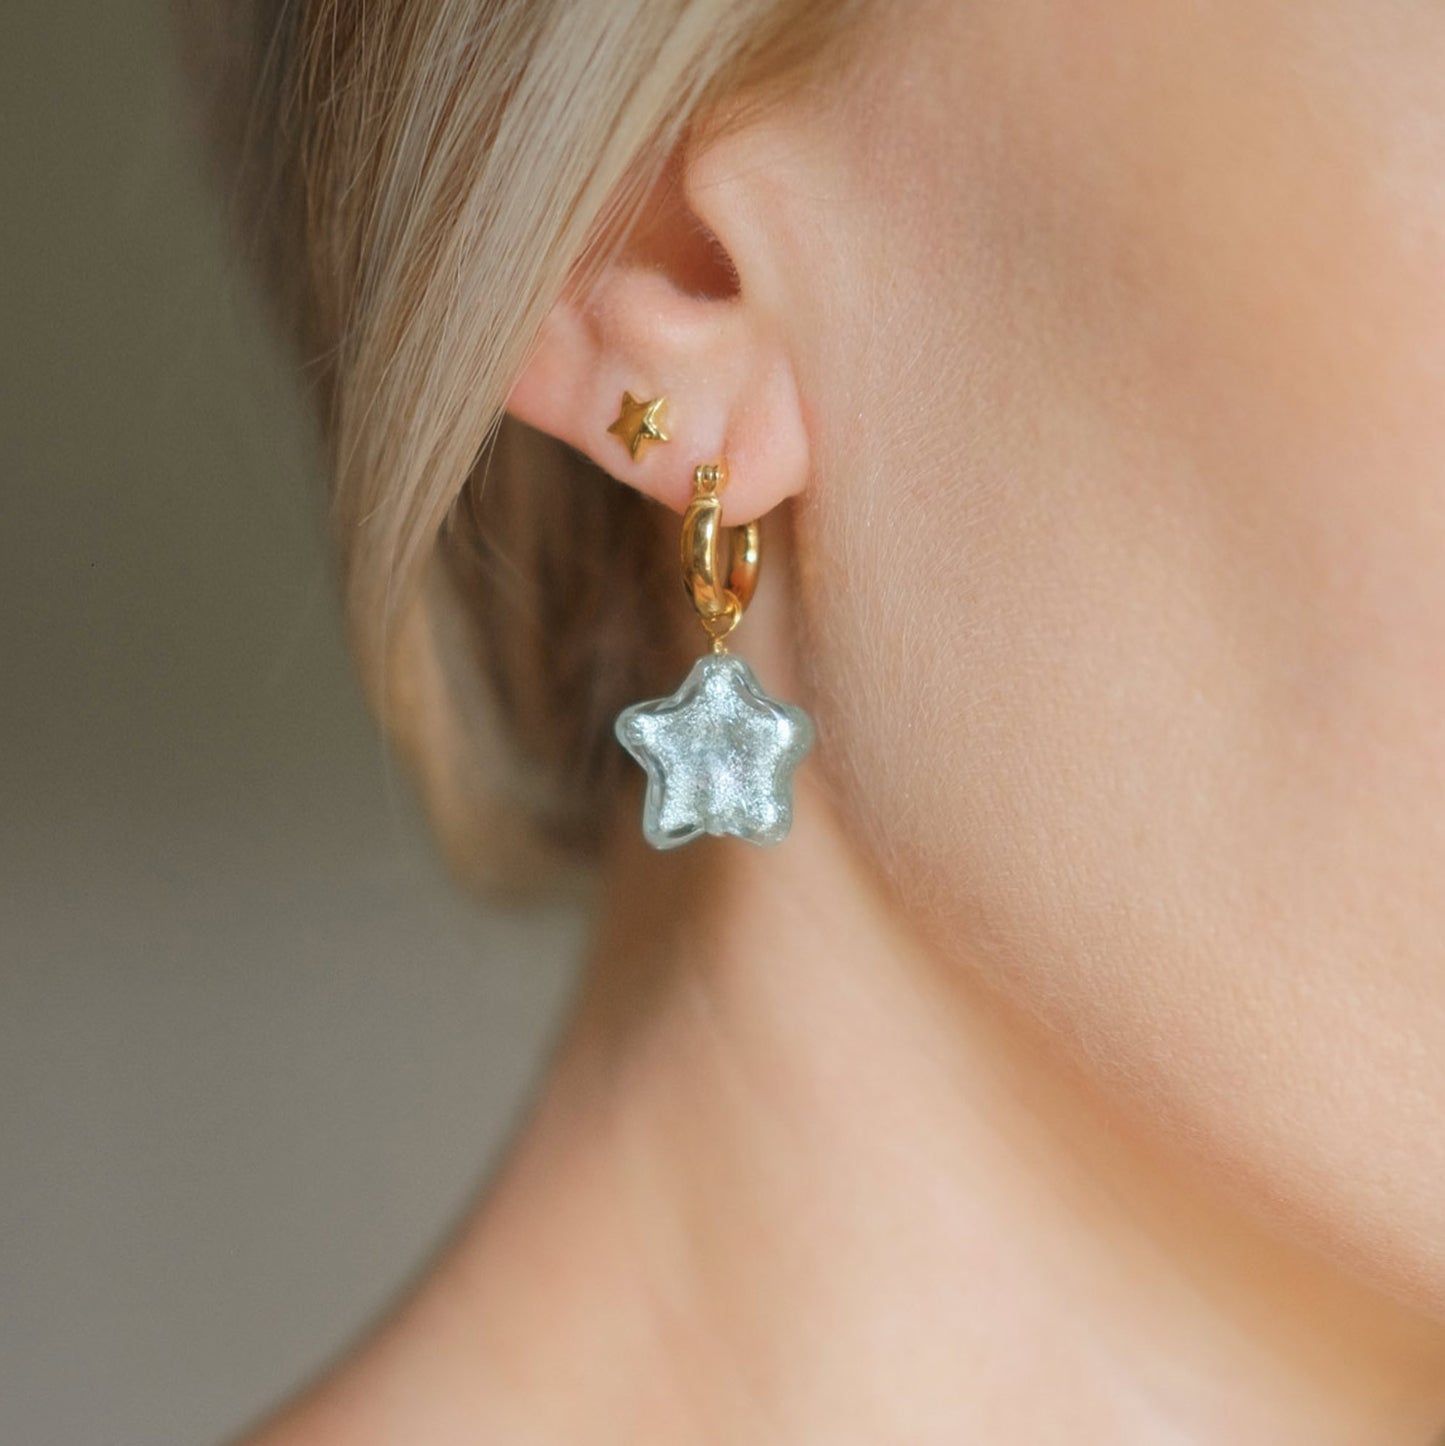 Star Hoop Earrings - Aqua/Gold Plated